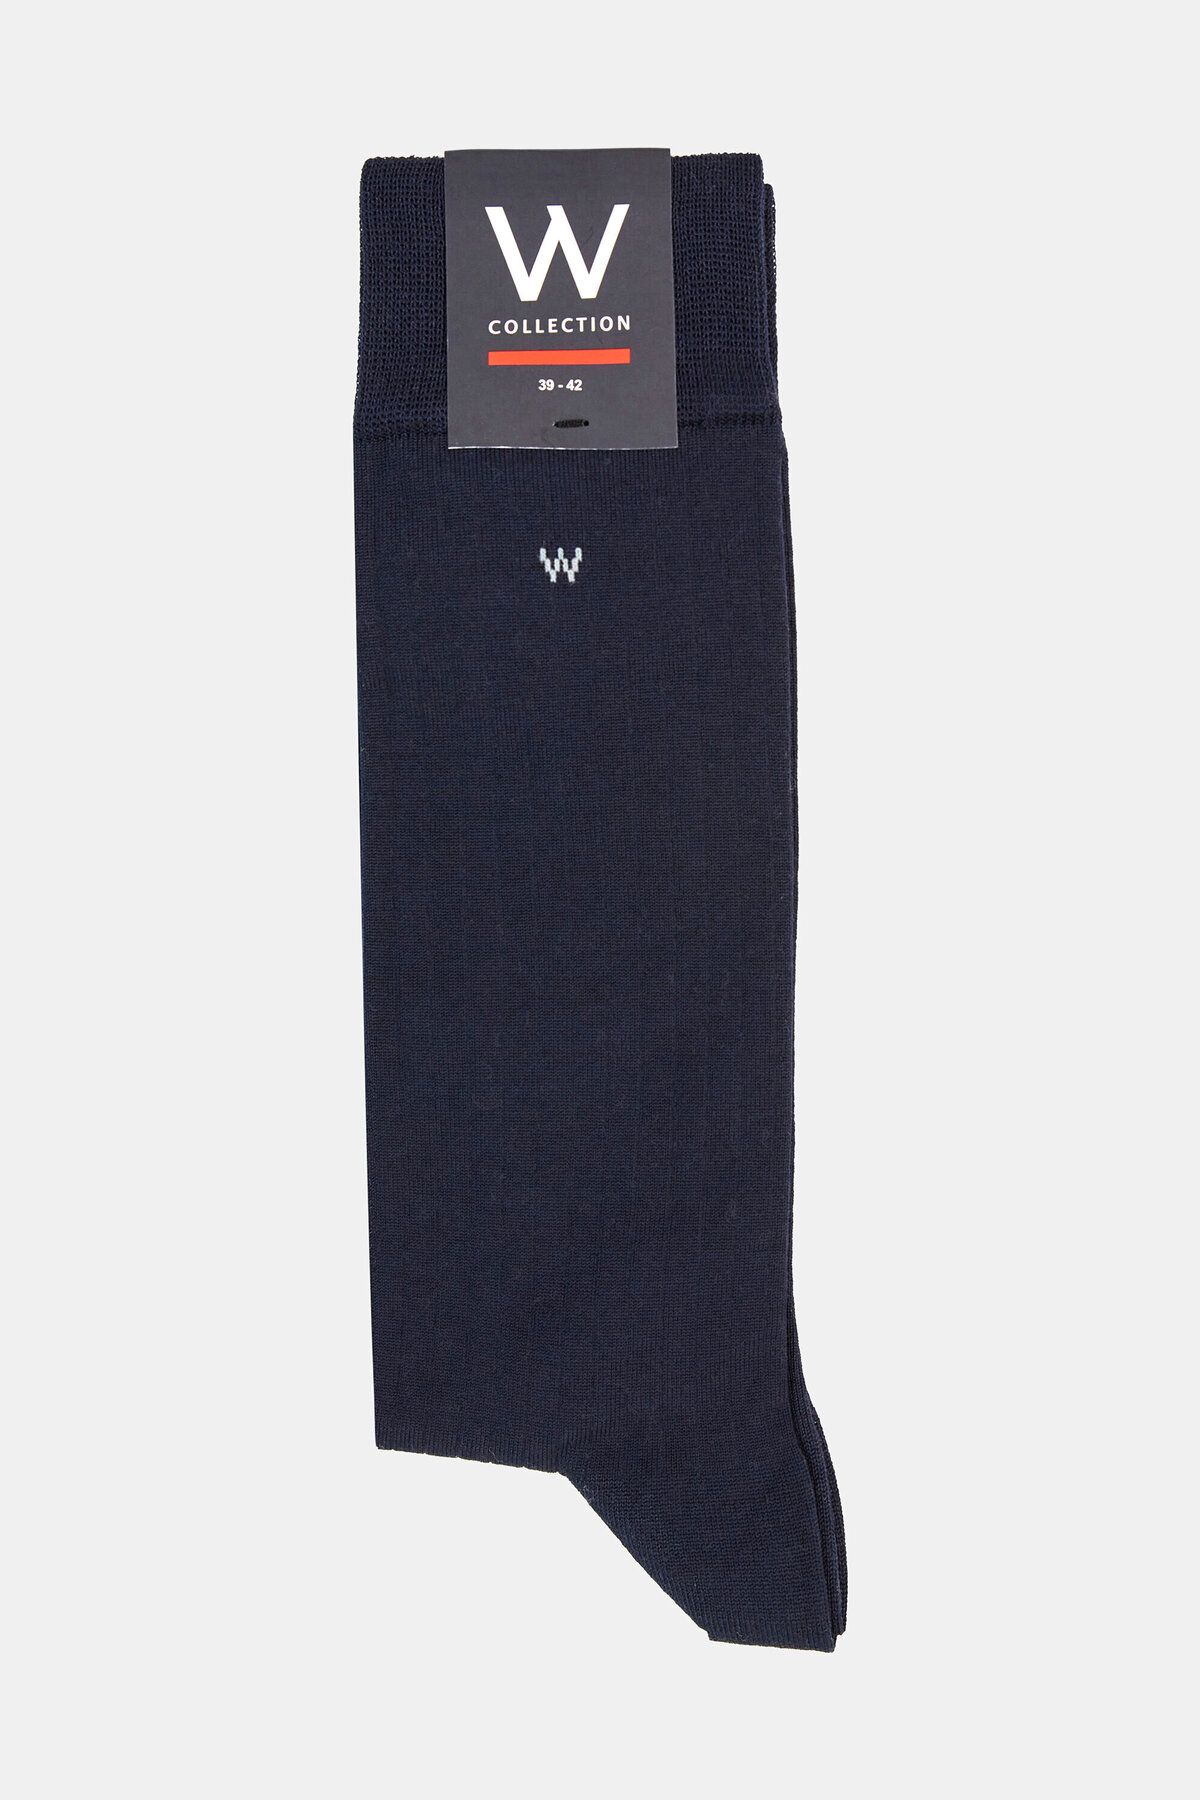 W Collection Lacivert Uzun Soket Çorap